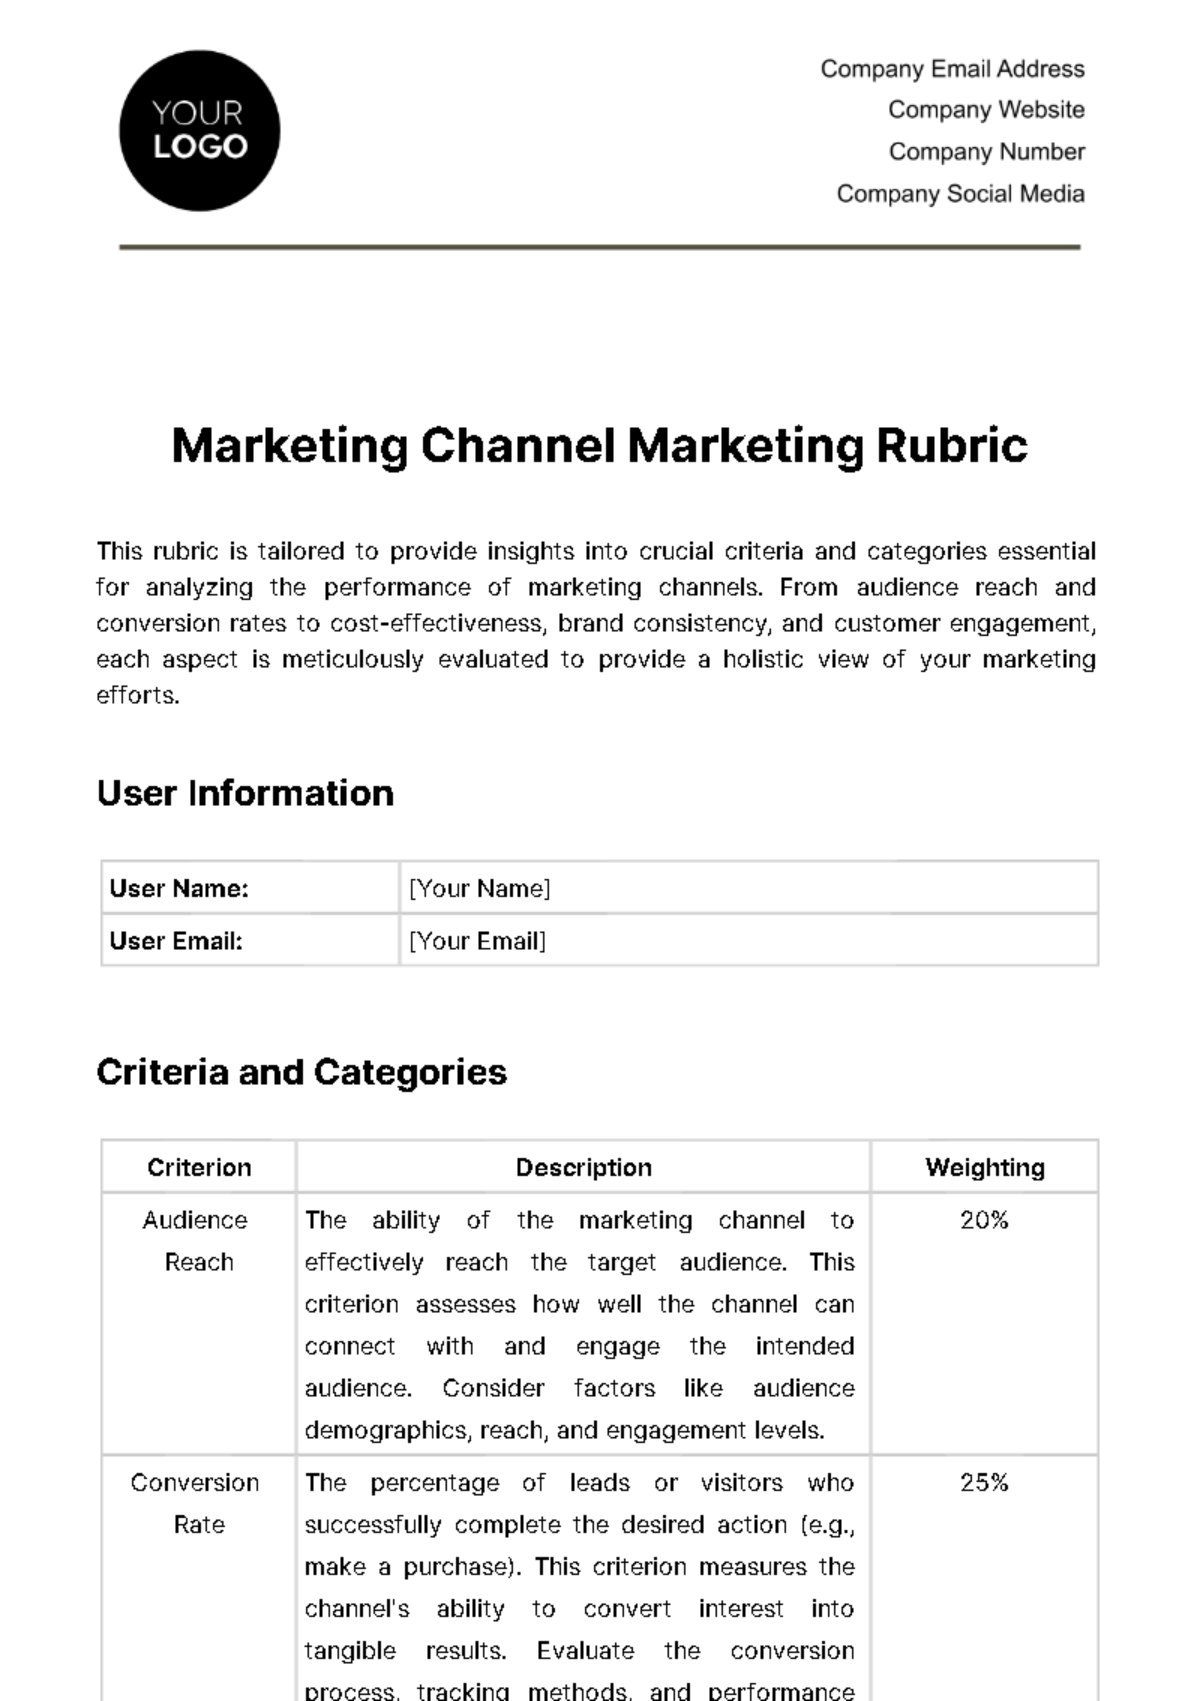 Free Marketing Channel Marketing Rubric Template